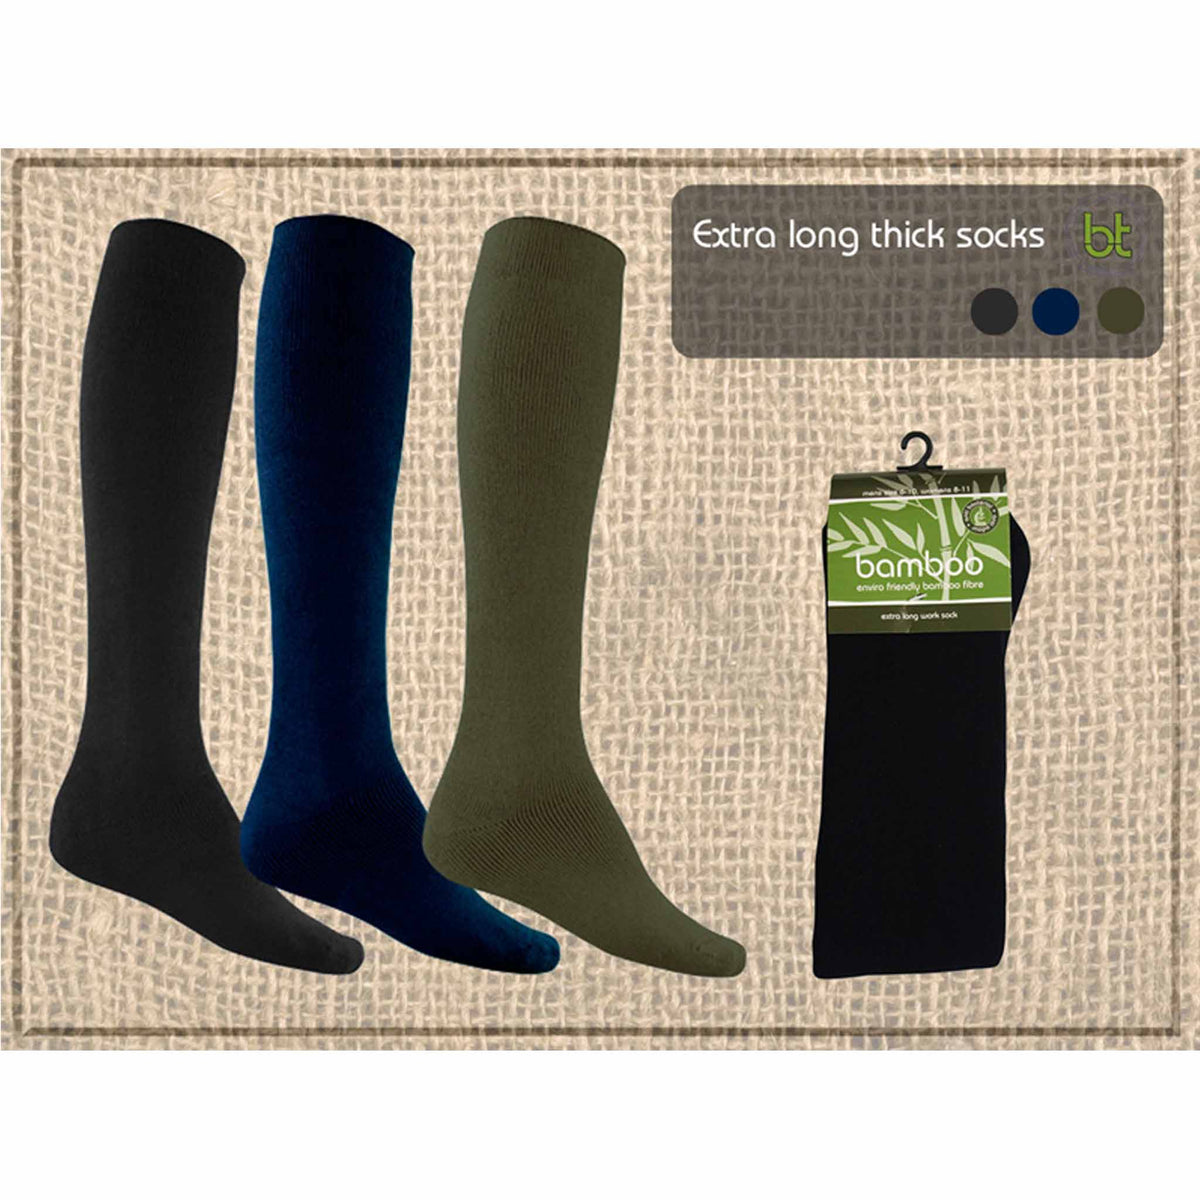 bamboo extra long thick socks in black, navy and khaki